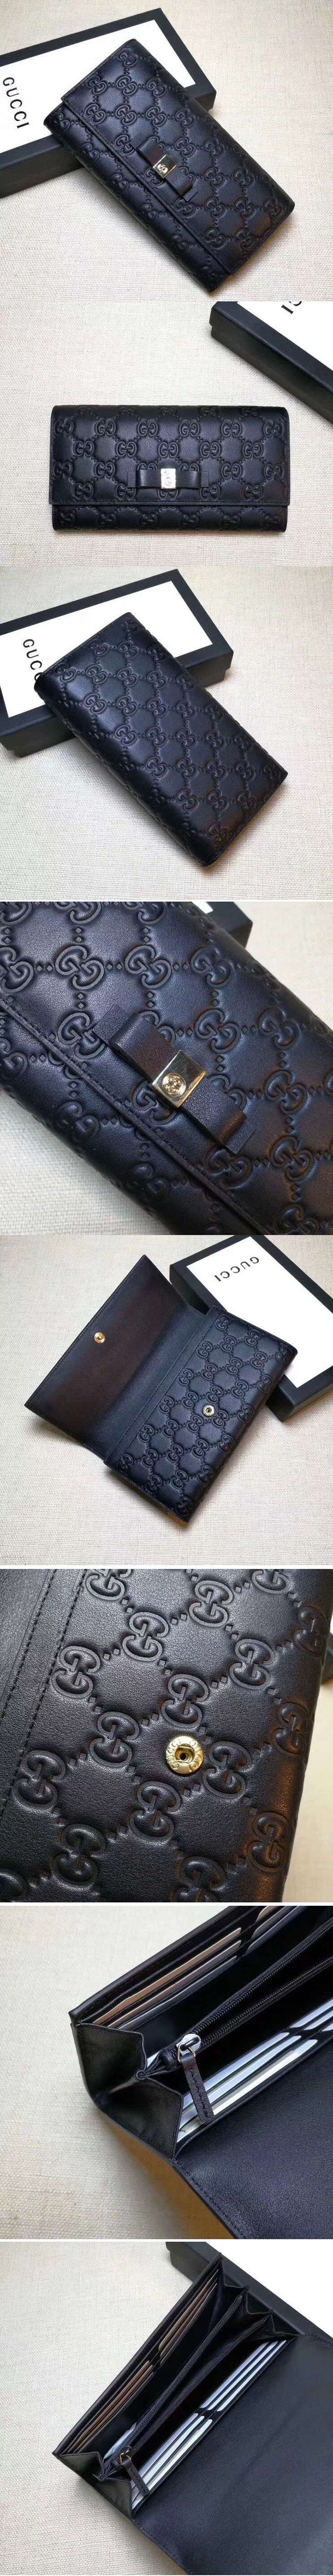 Replica Gucci 388679 Bow Signature Continental Wallet Black